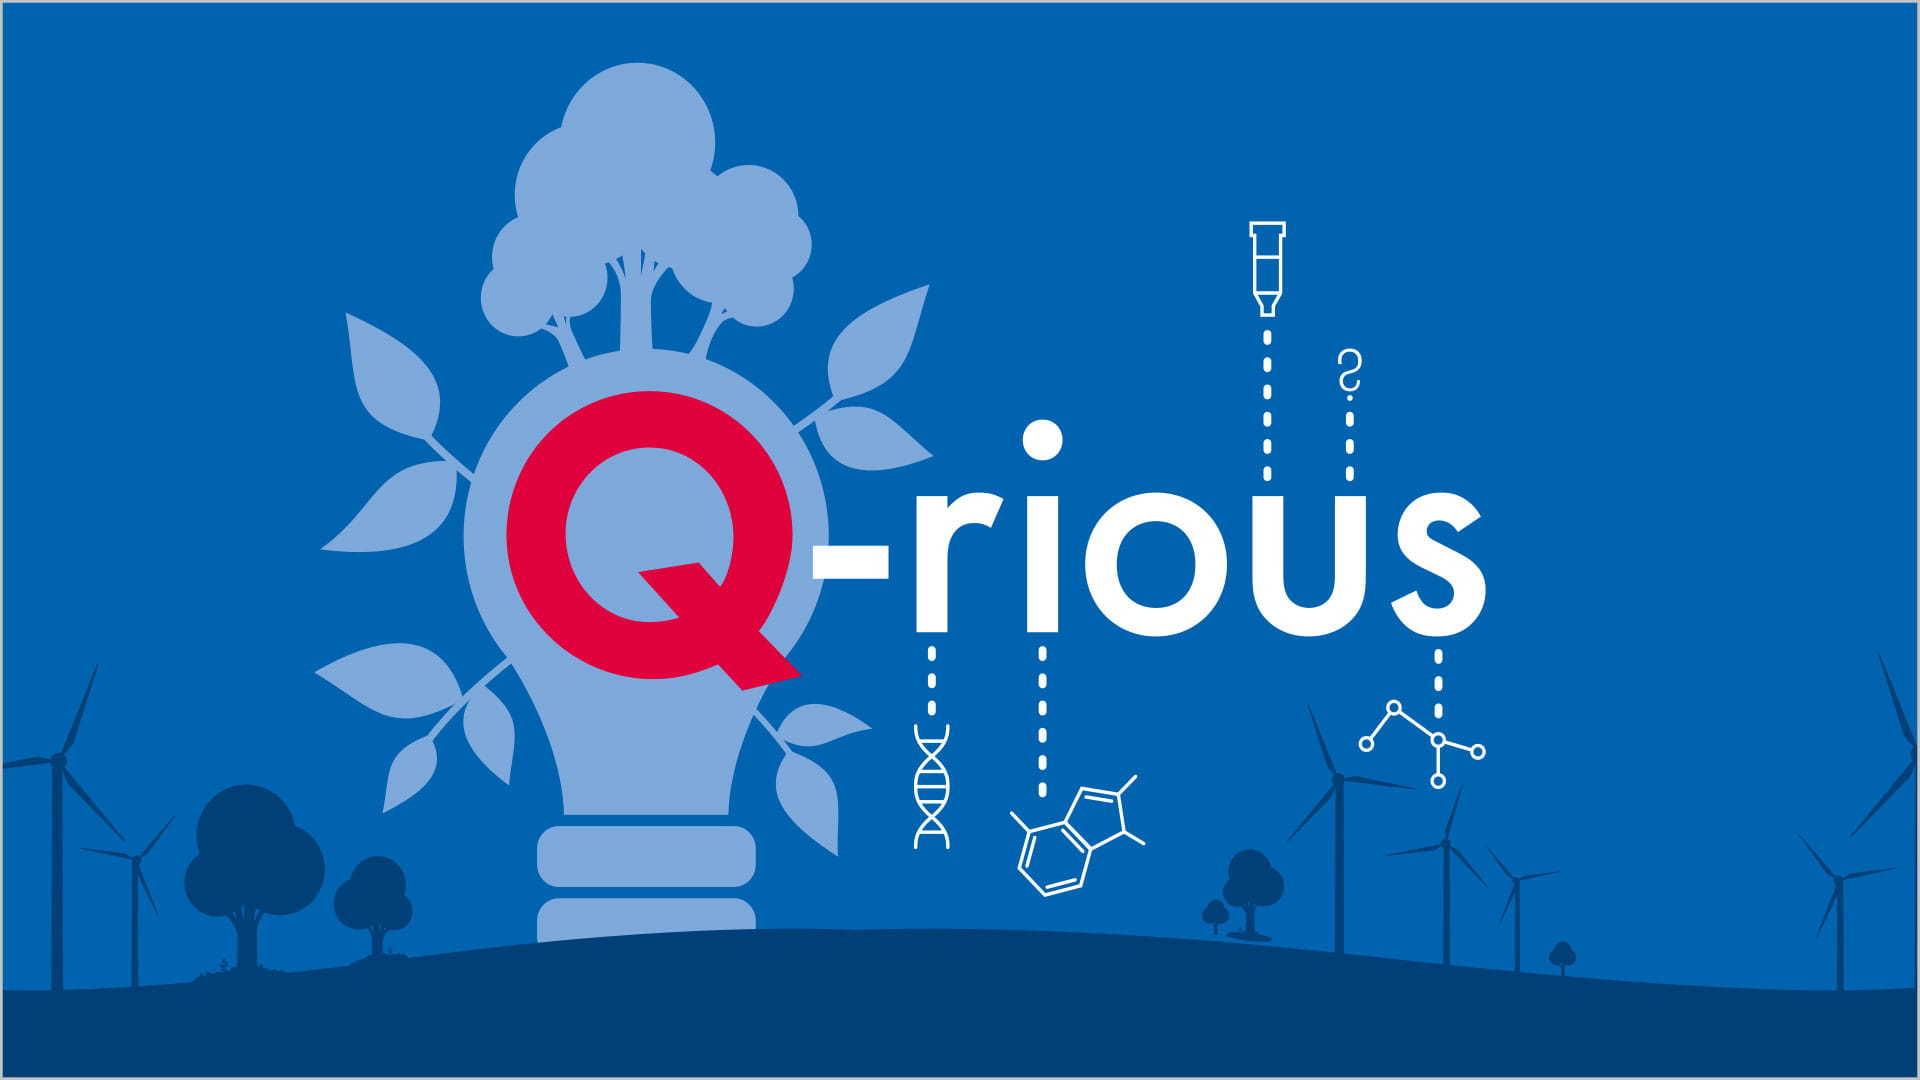 Q-rious event